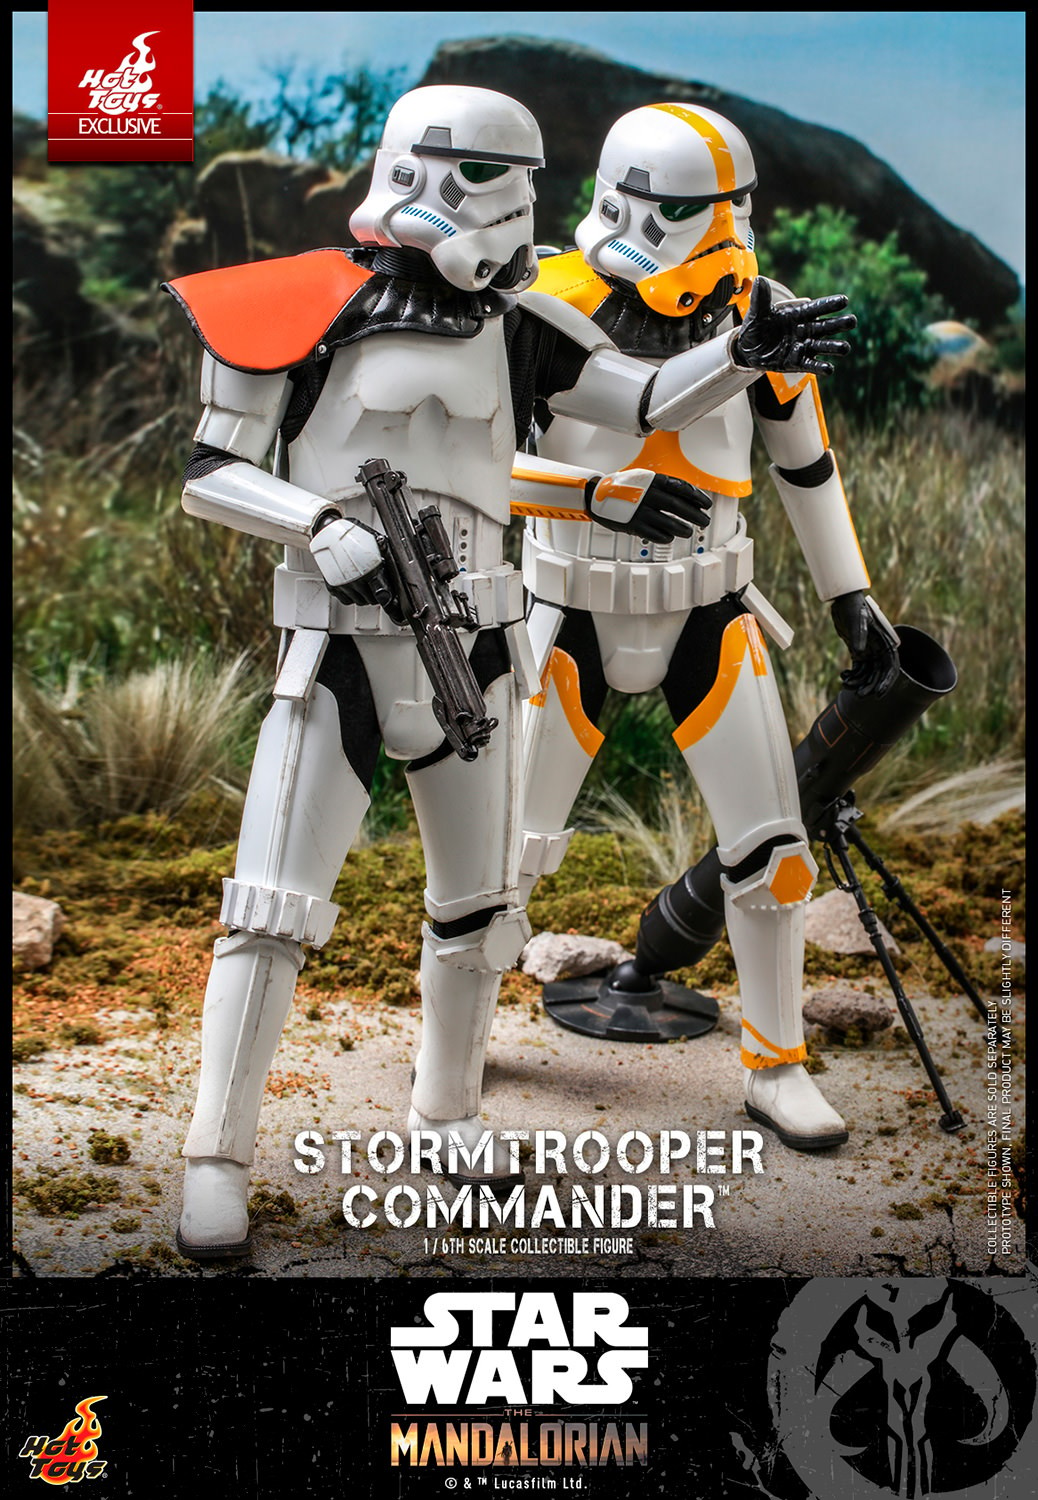 Stormtrooper Commander™ Exclusive Edition (Prototype Shown) View 5